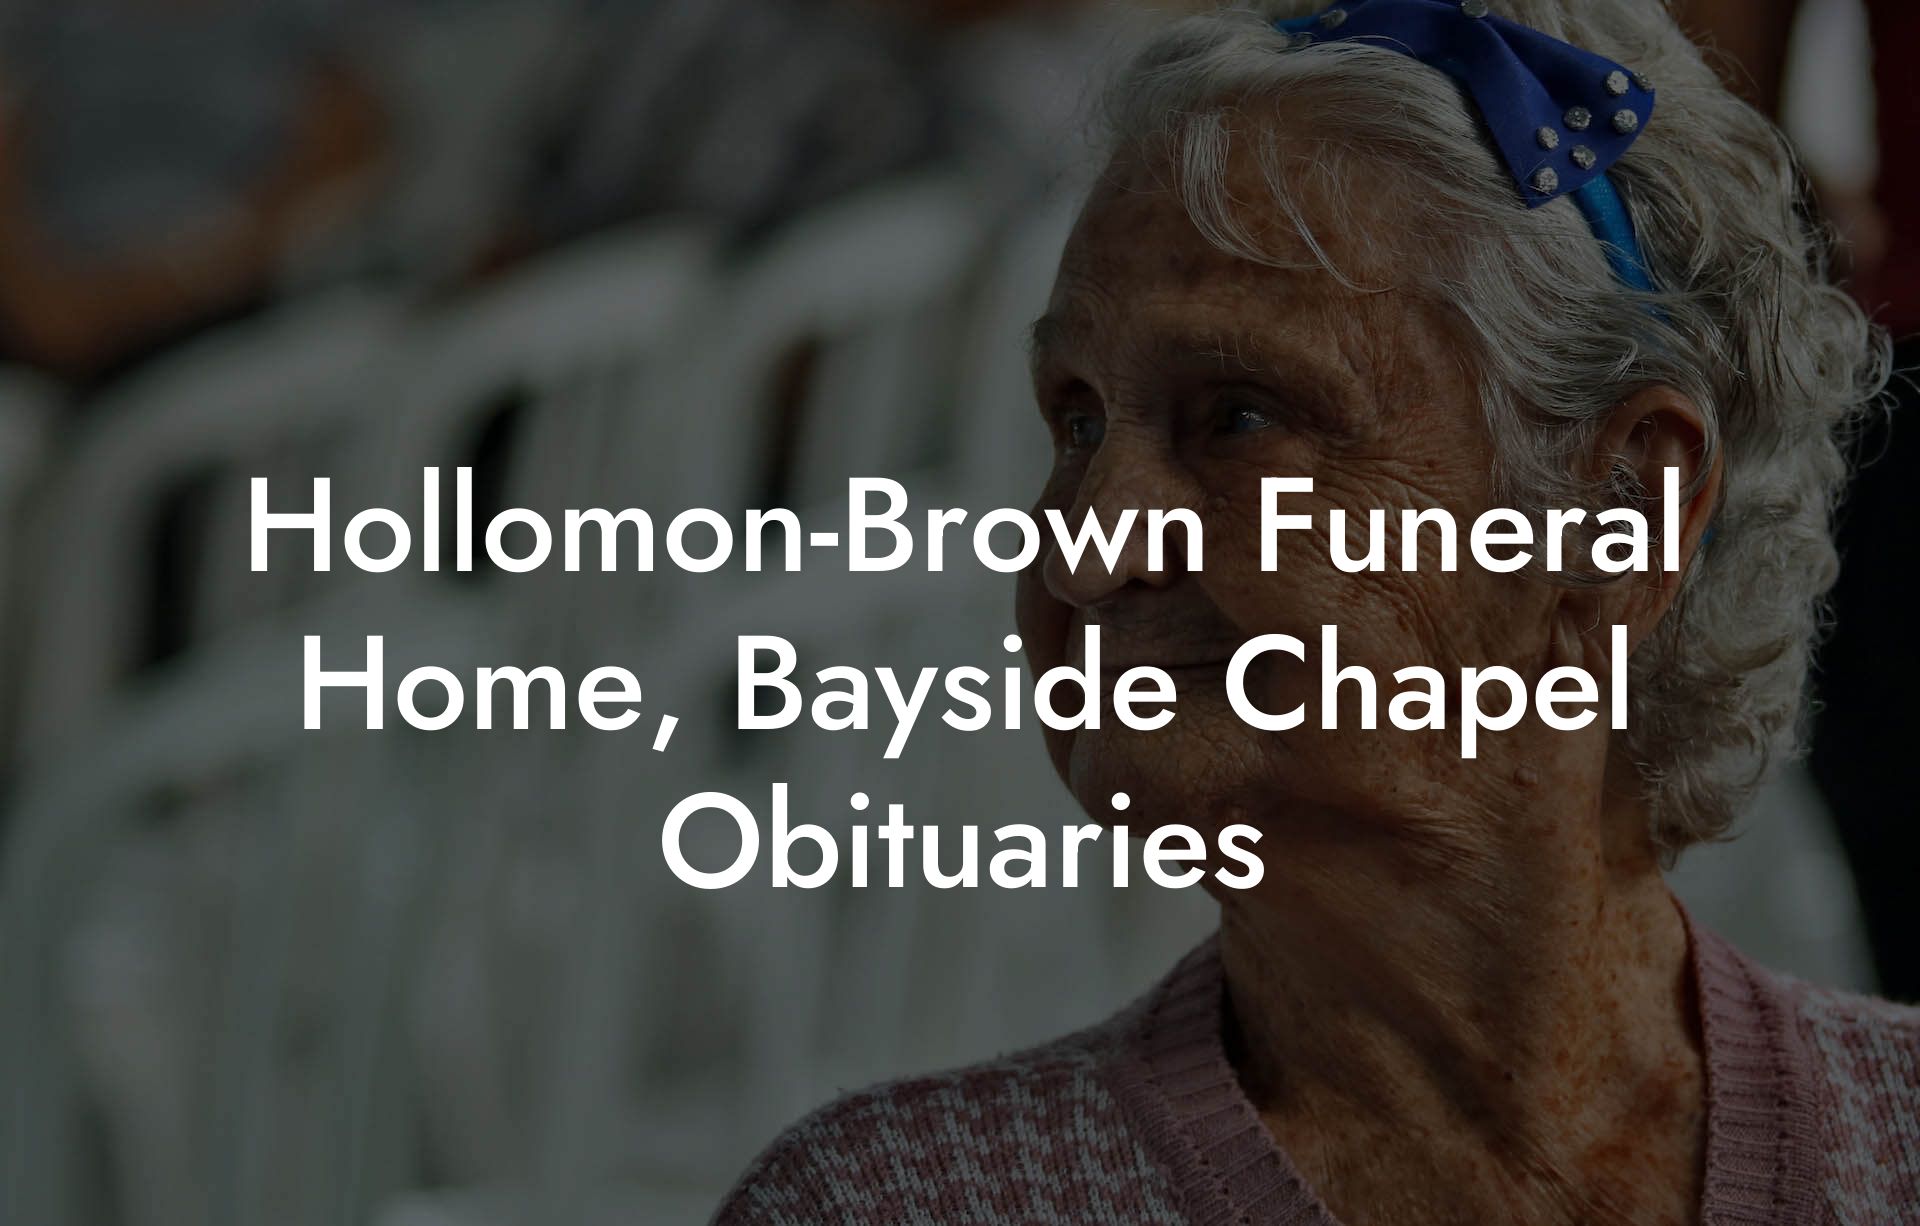 Hollomon-Brown Funeral Home, Bayside Chapel Obituaries